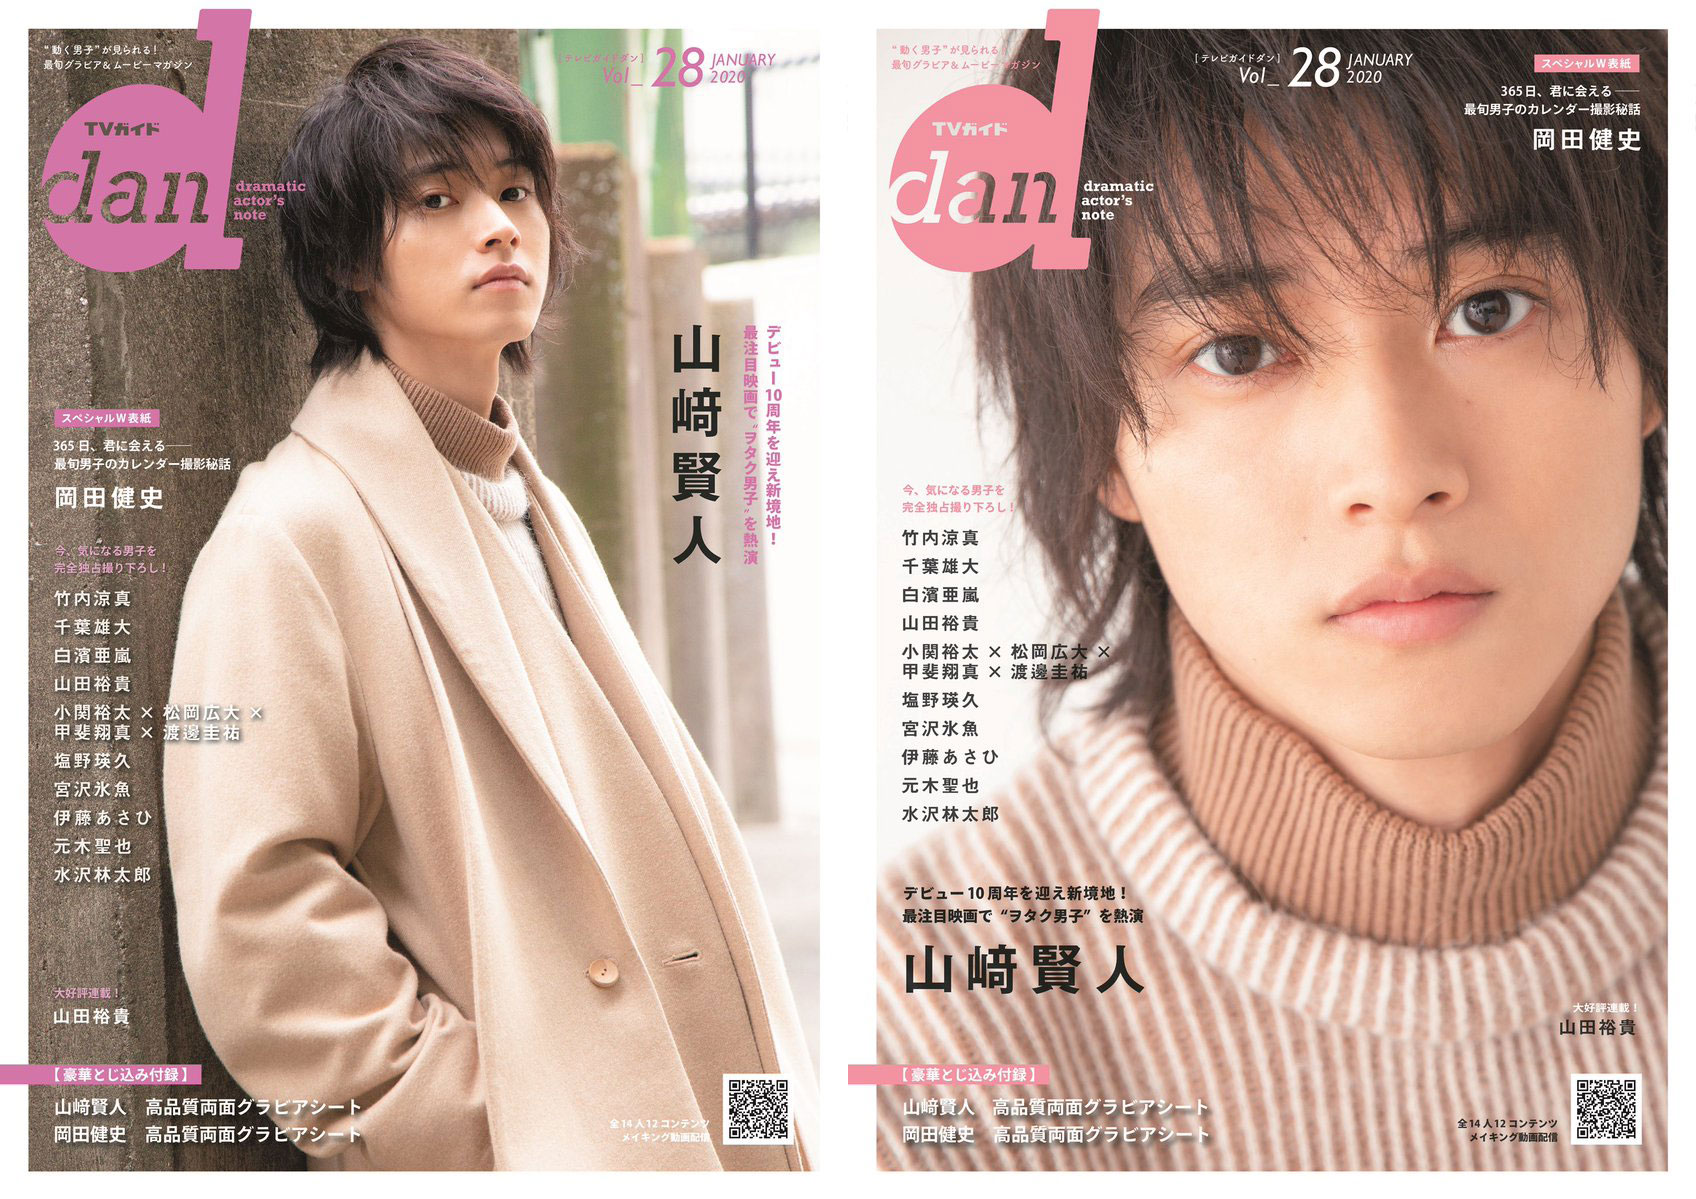 TV Guide dan vol.28 covers – yamazaki-kento.com